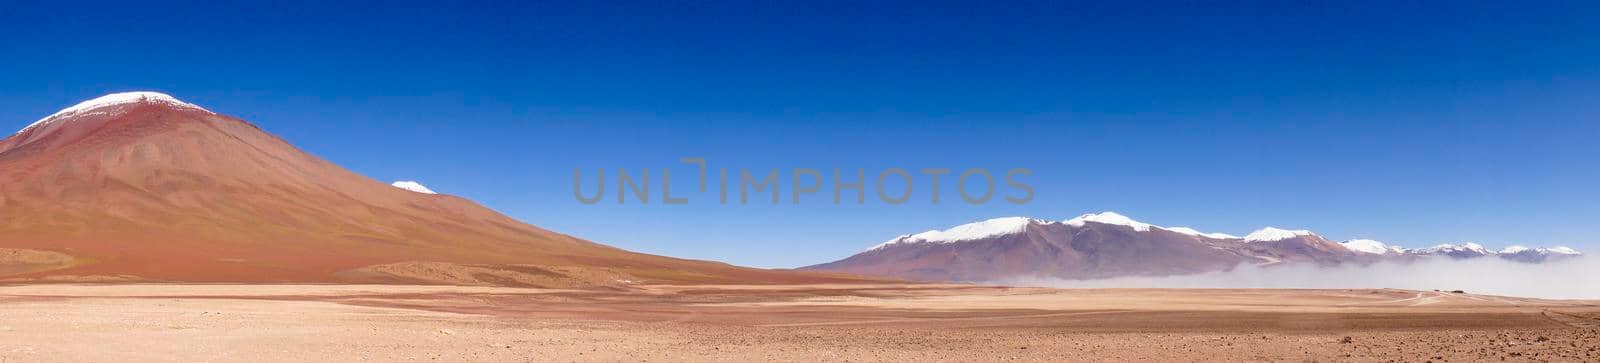 Altiplano Lakes, Bolivia, South America by giannakisphoto